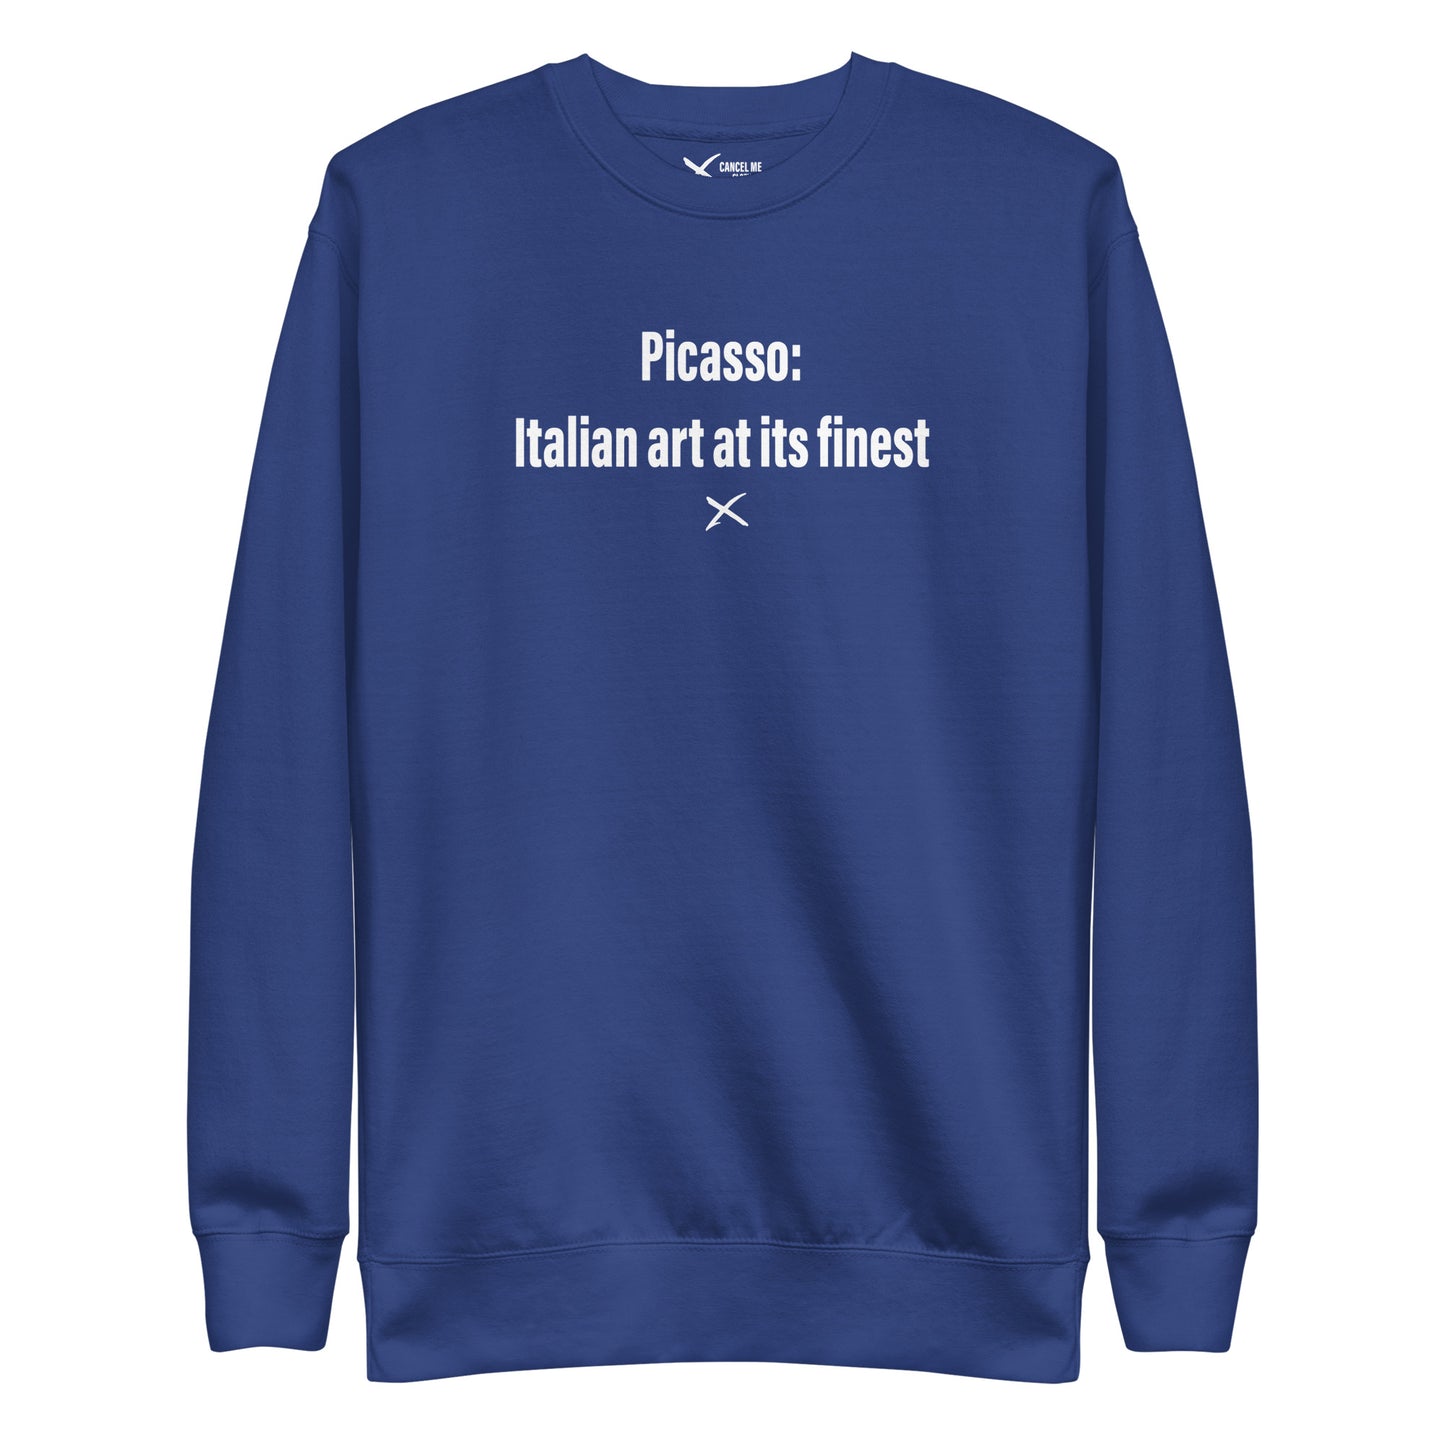 Picasso: Italian art at its finest - Sweatshirt